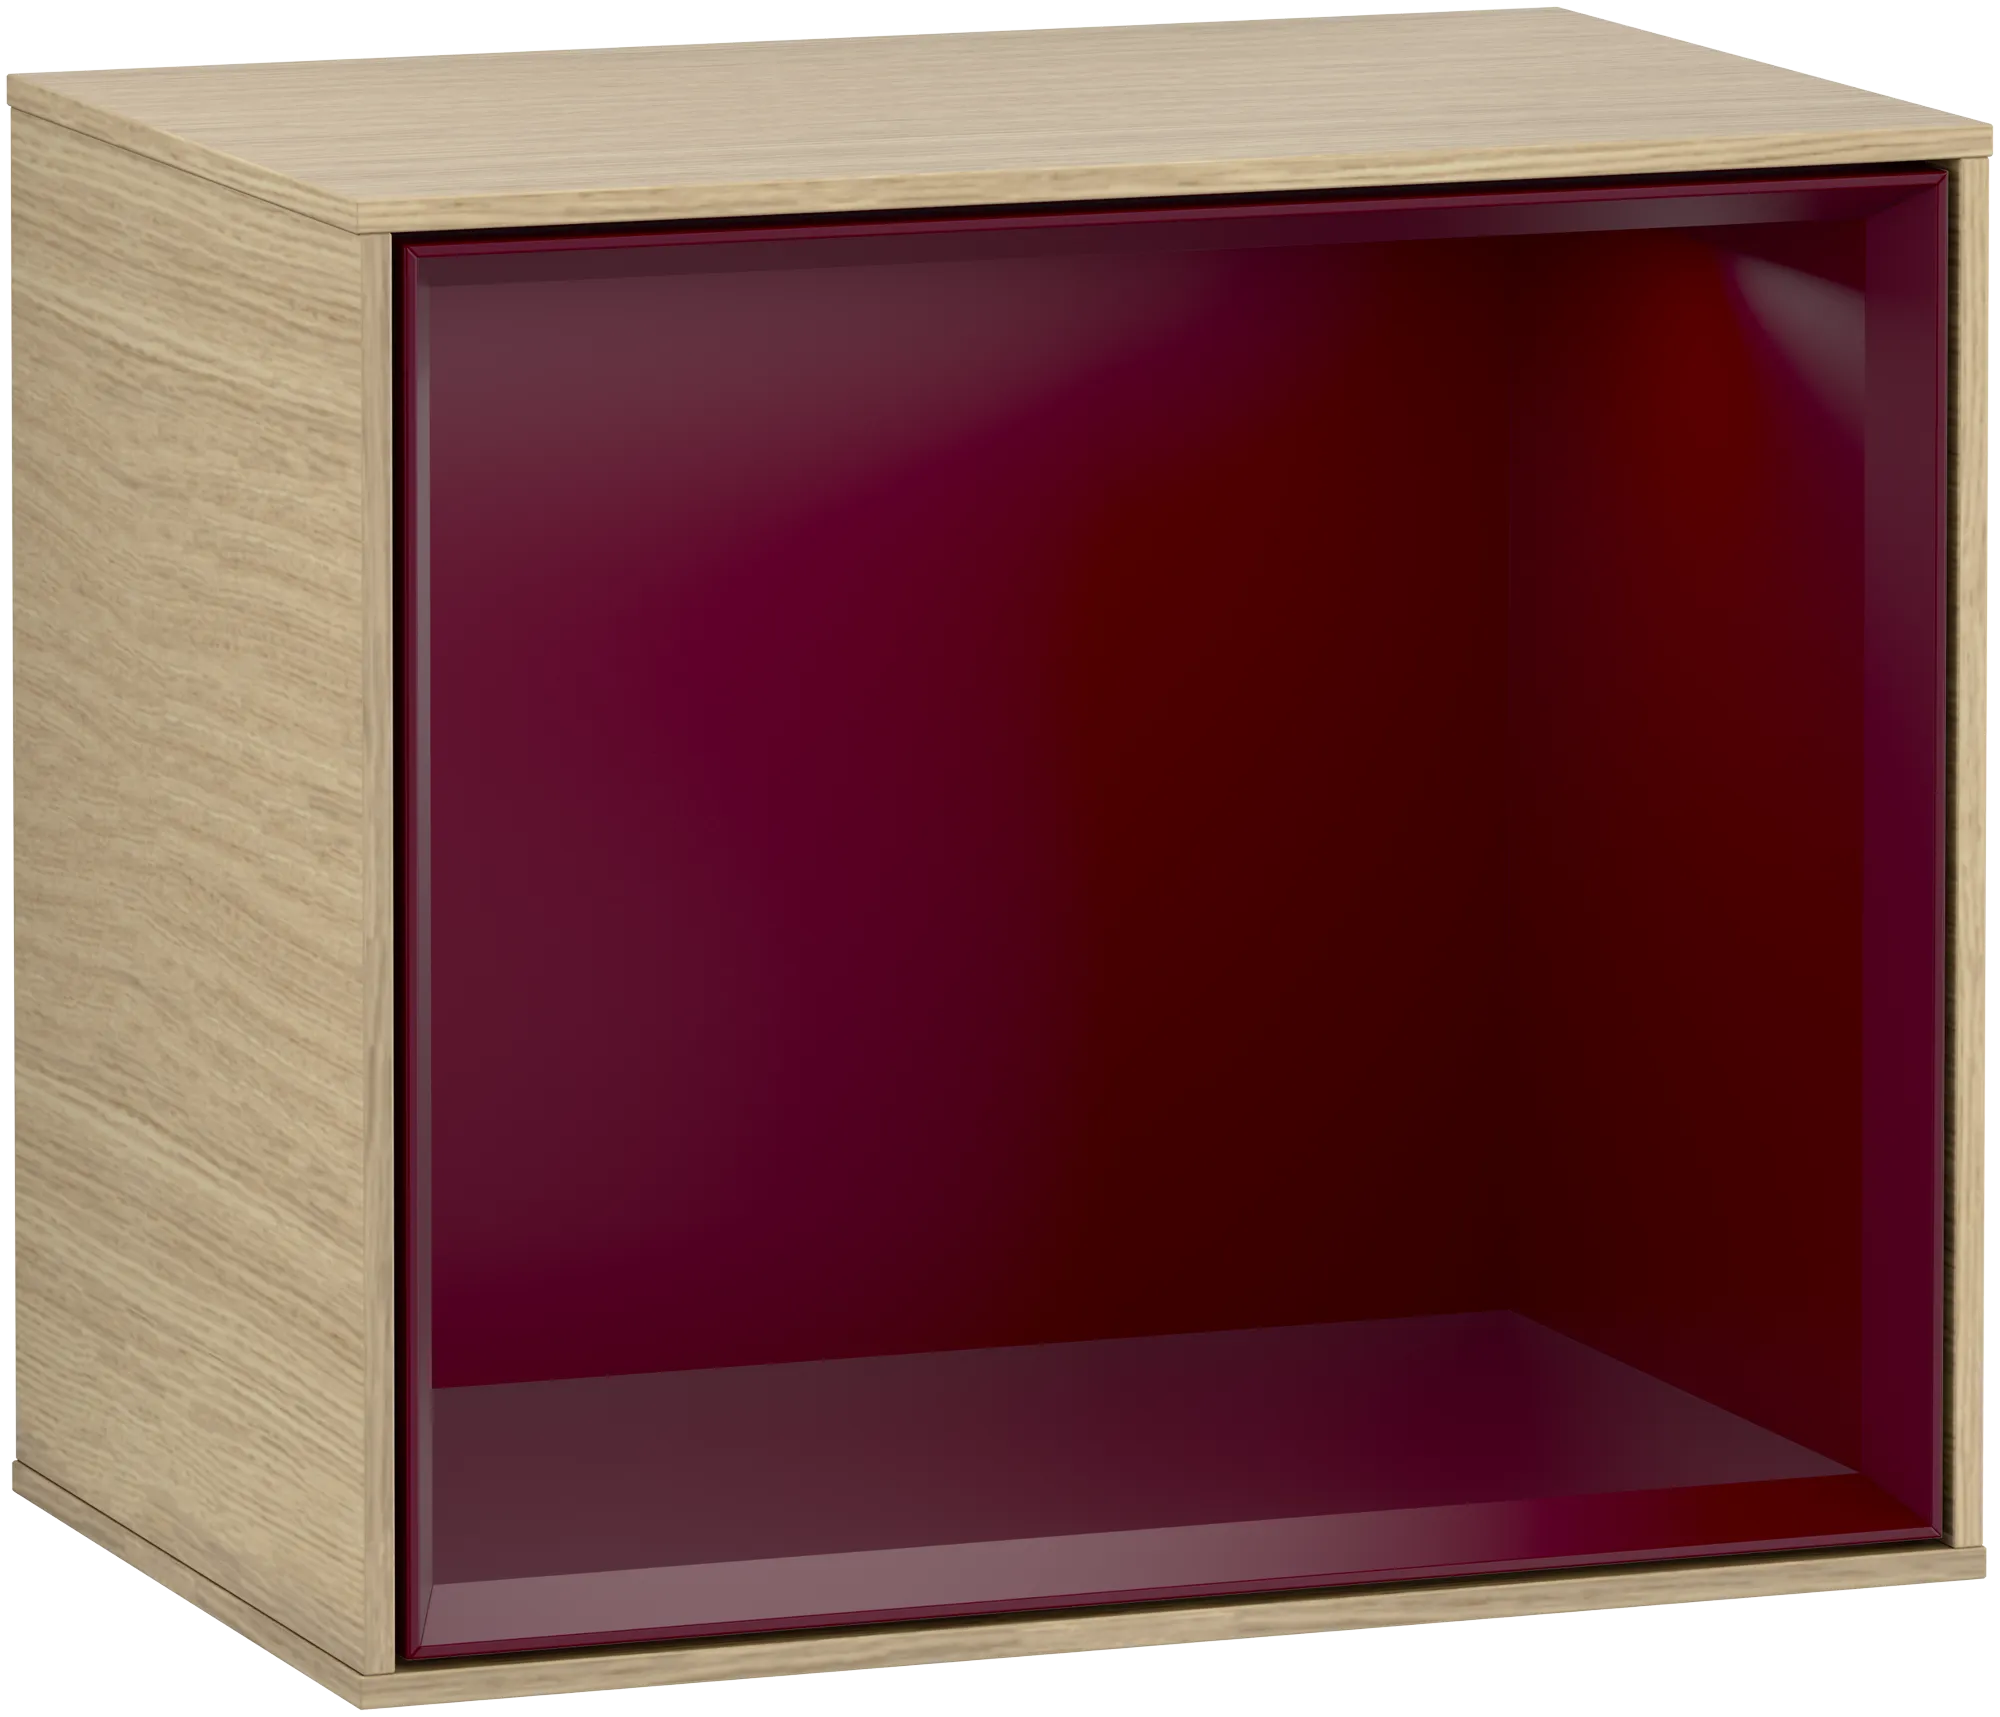 Bild von VILLEROY BOCH Finion Regalmodul, mit Beleuchtung, 418 x 340 x 270 mm, Oak Veneer / Peony Matt Lacquer #G580HBPC